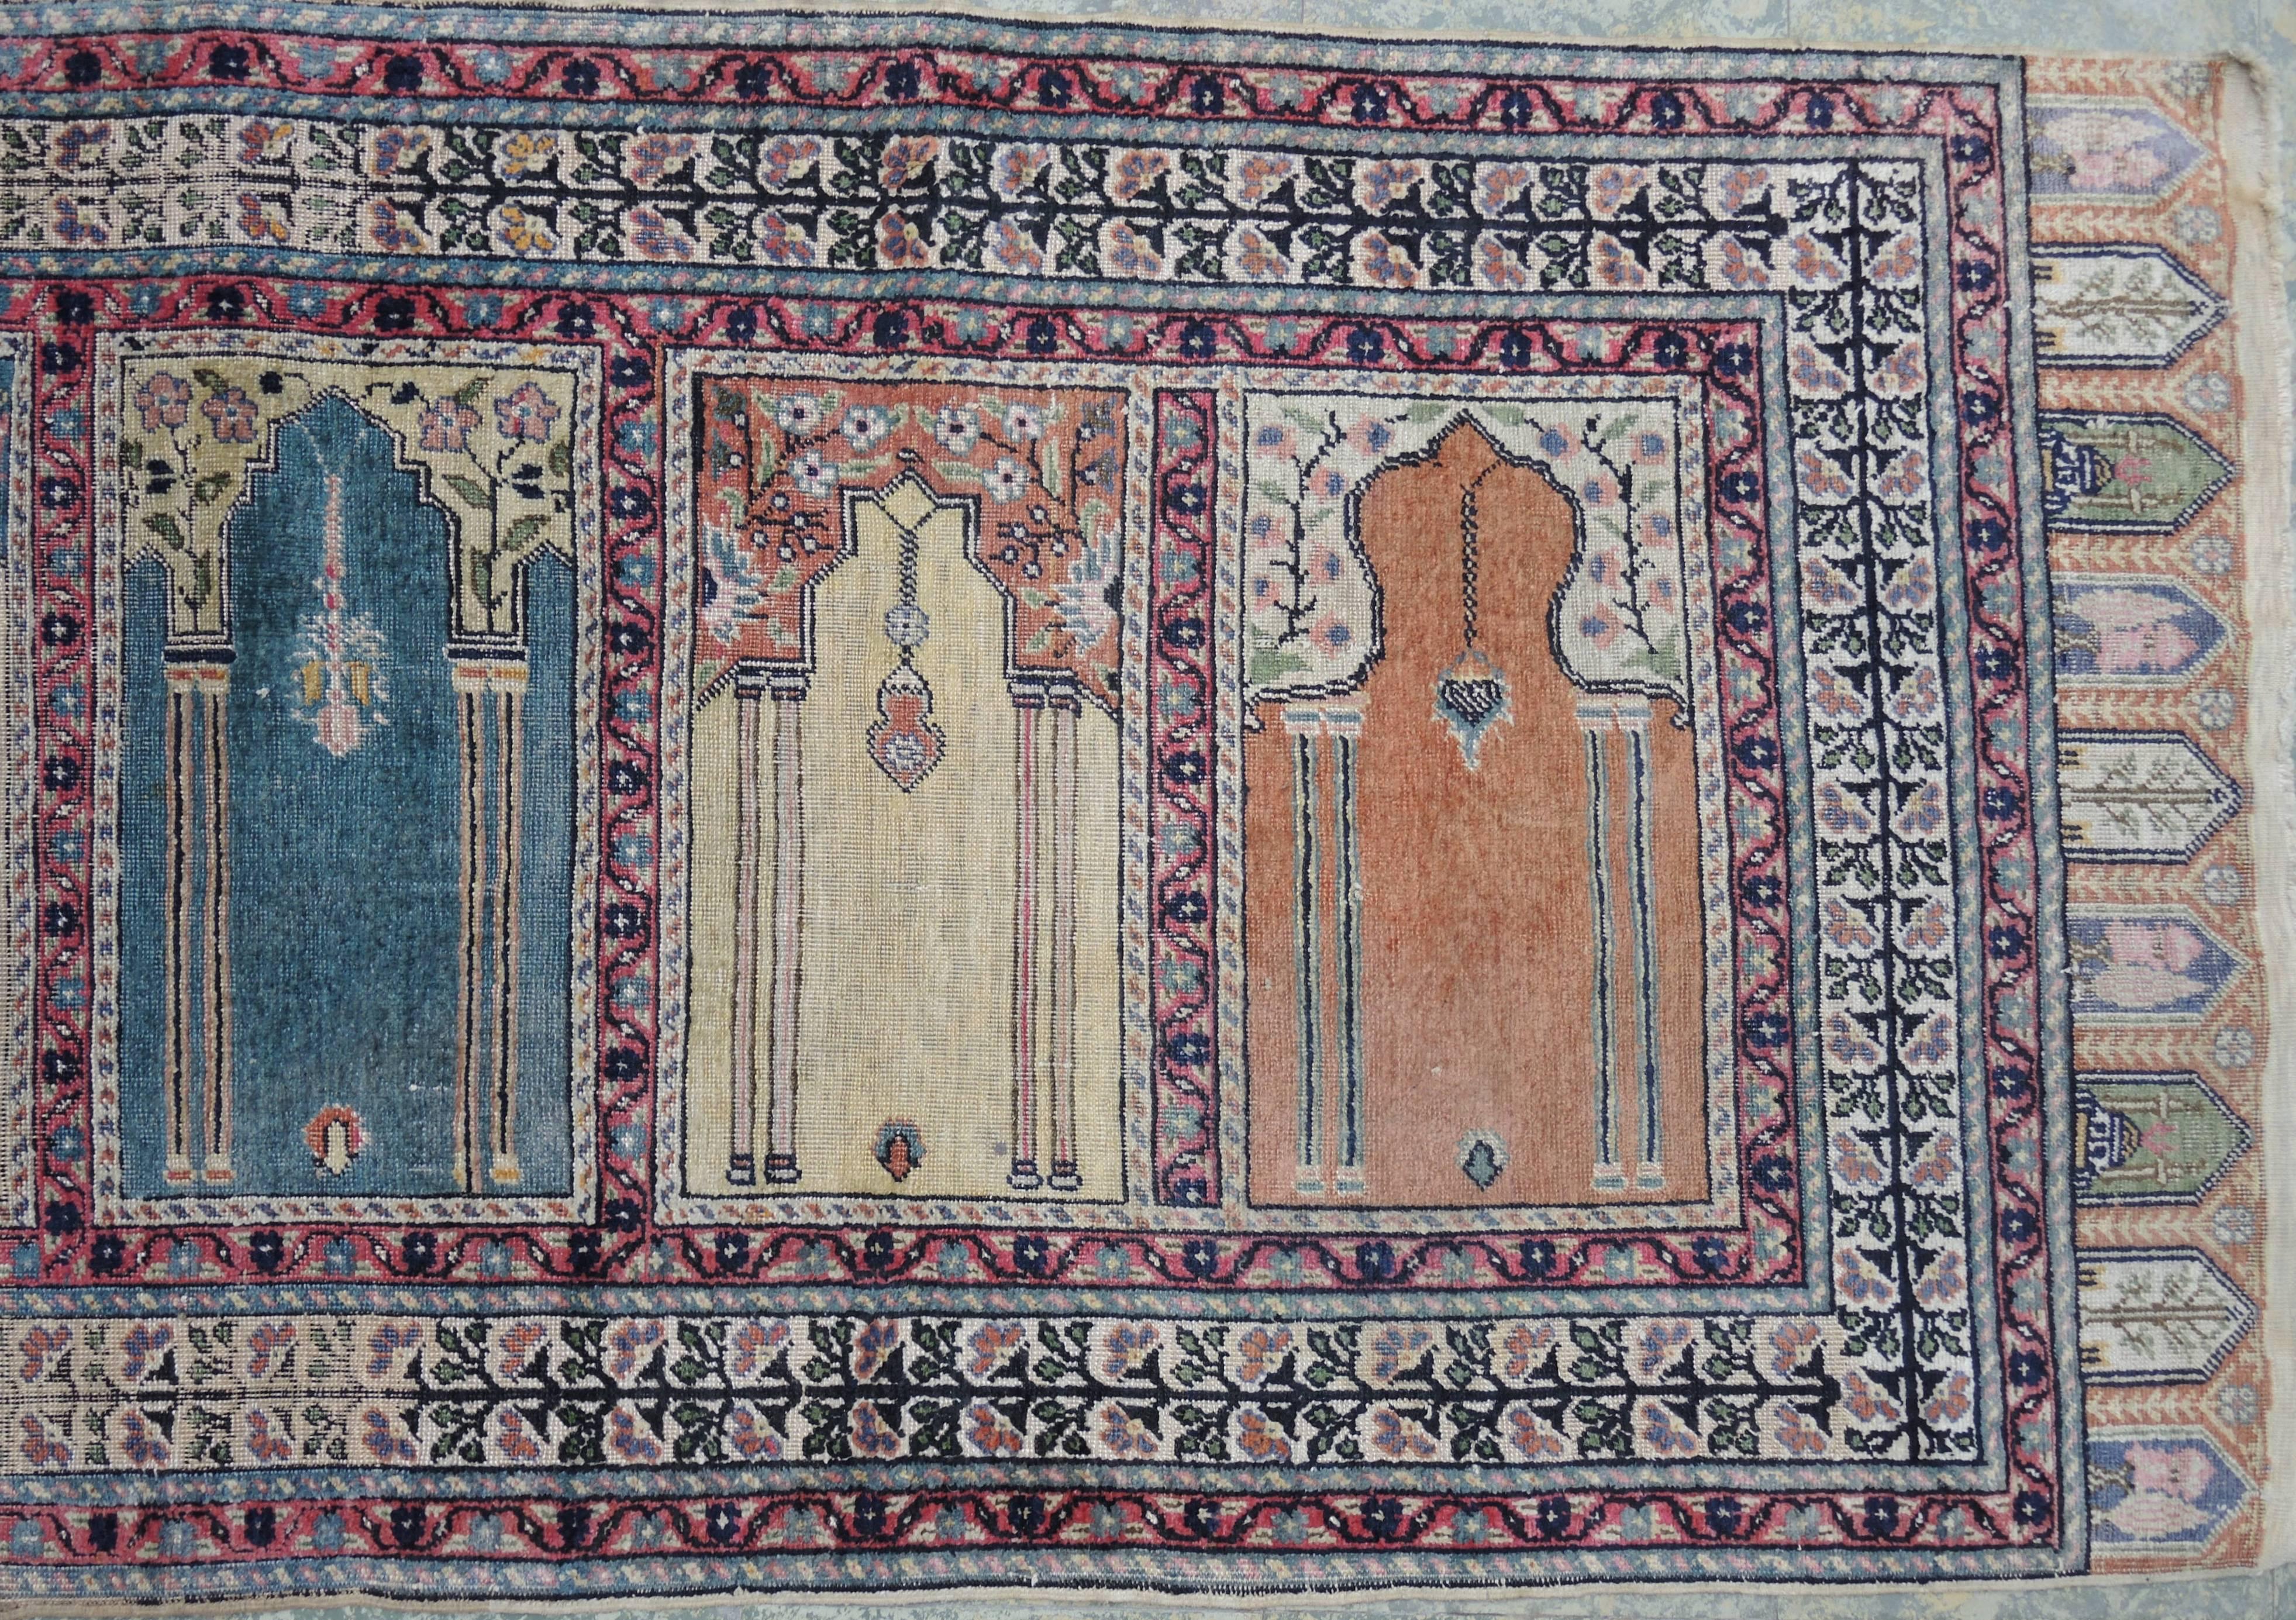 Cotton Antique Turkish Anatolian Kayseri Silk Rug with Architectural Arches and Pillars